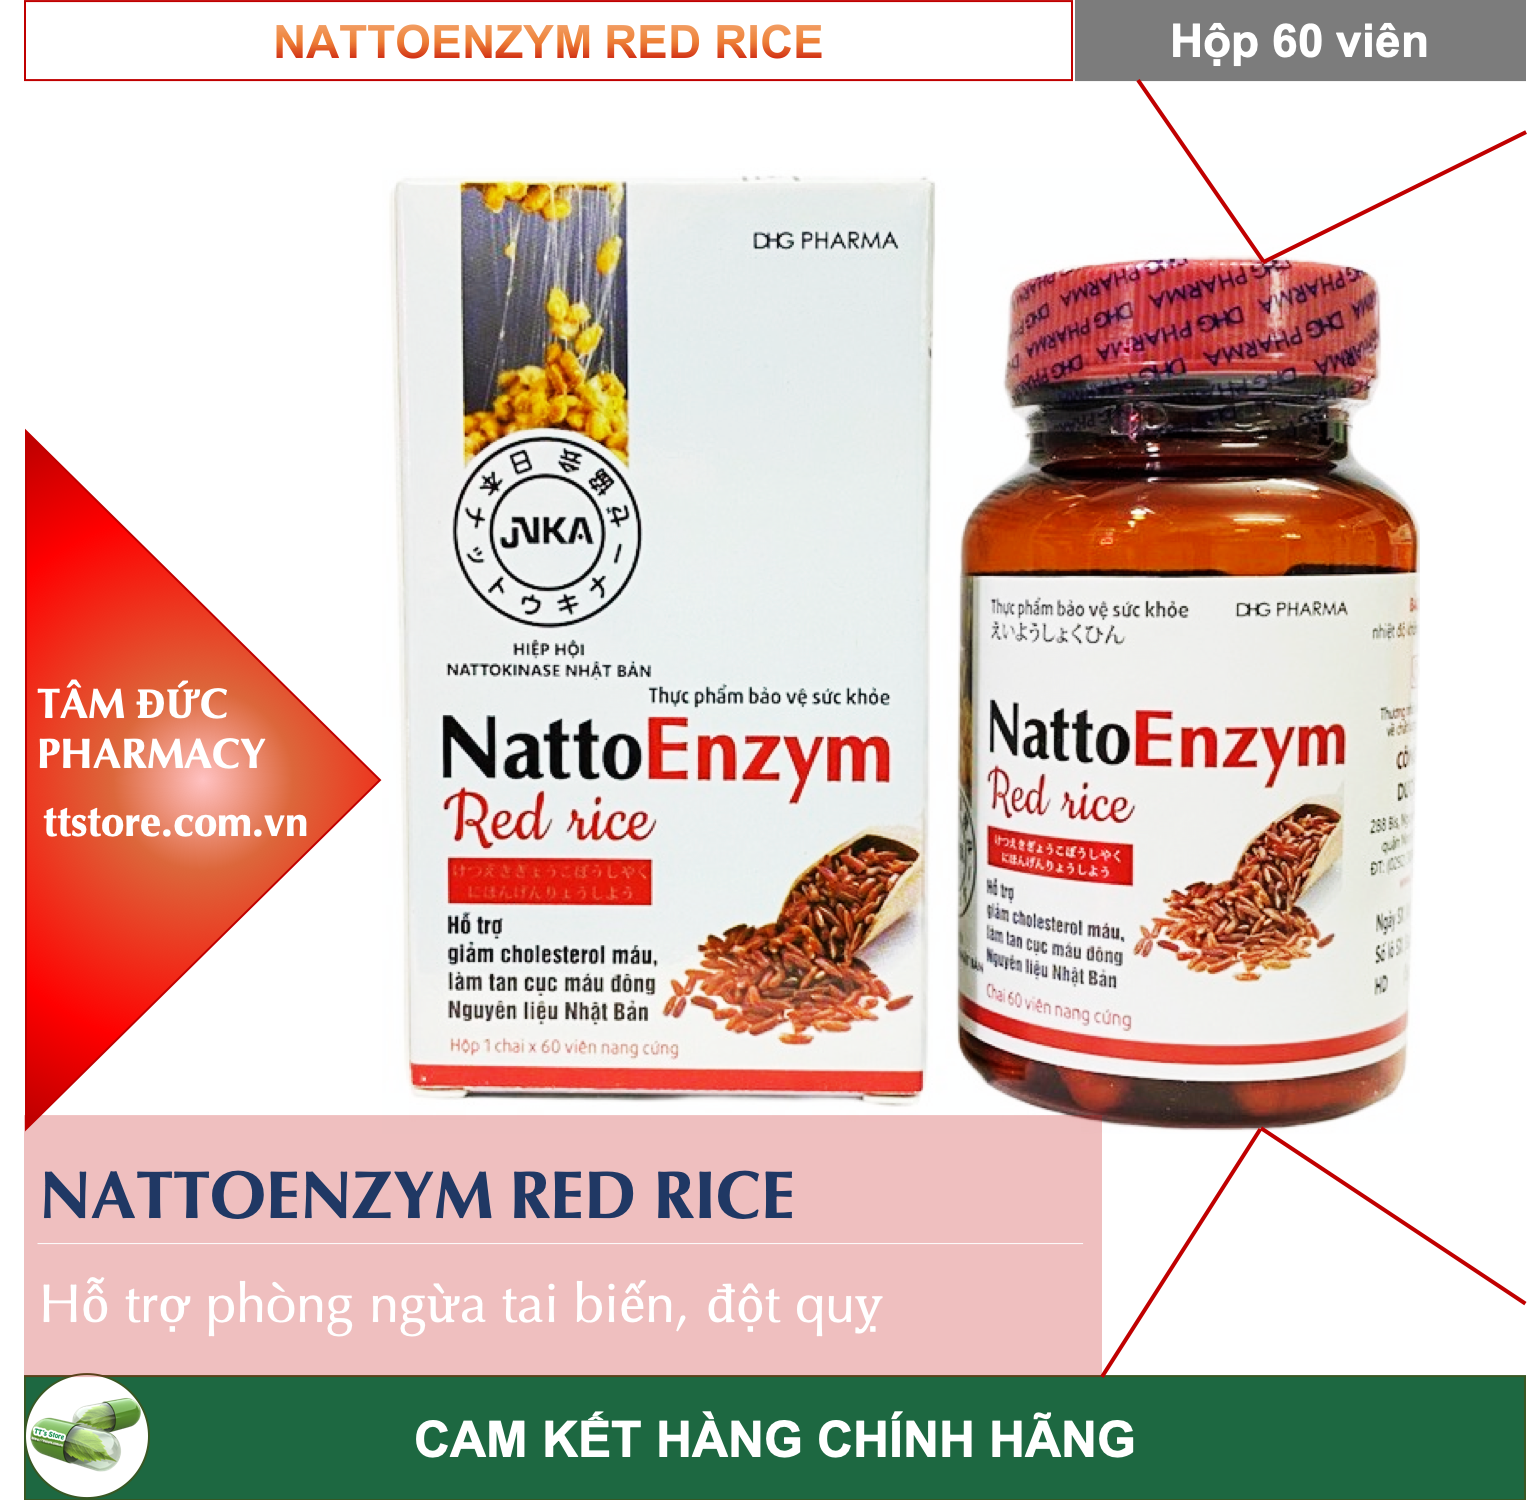 HCMNattoEnzym Red rice gạo đỏ Hộp 60 viên - Nattokinase - Natto enzym